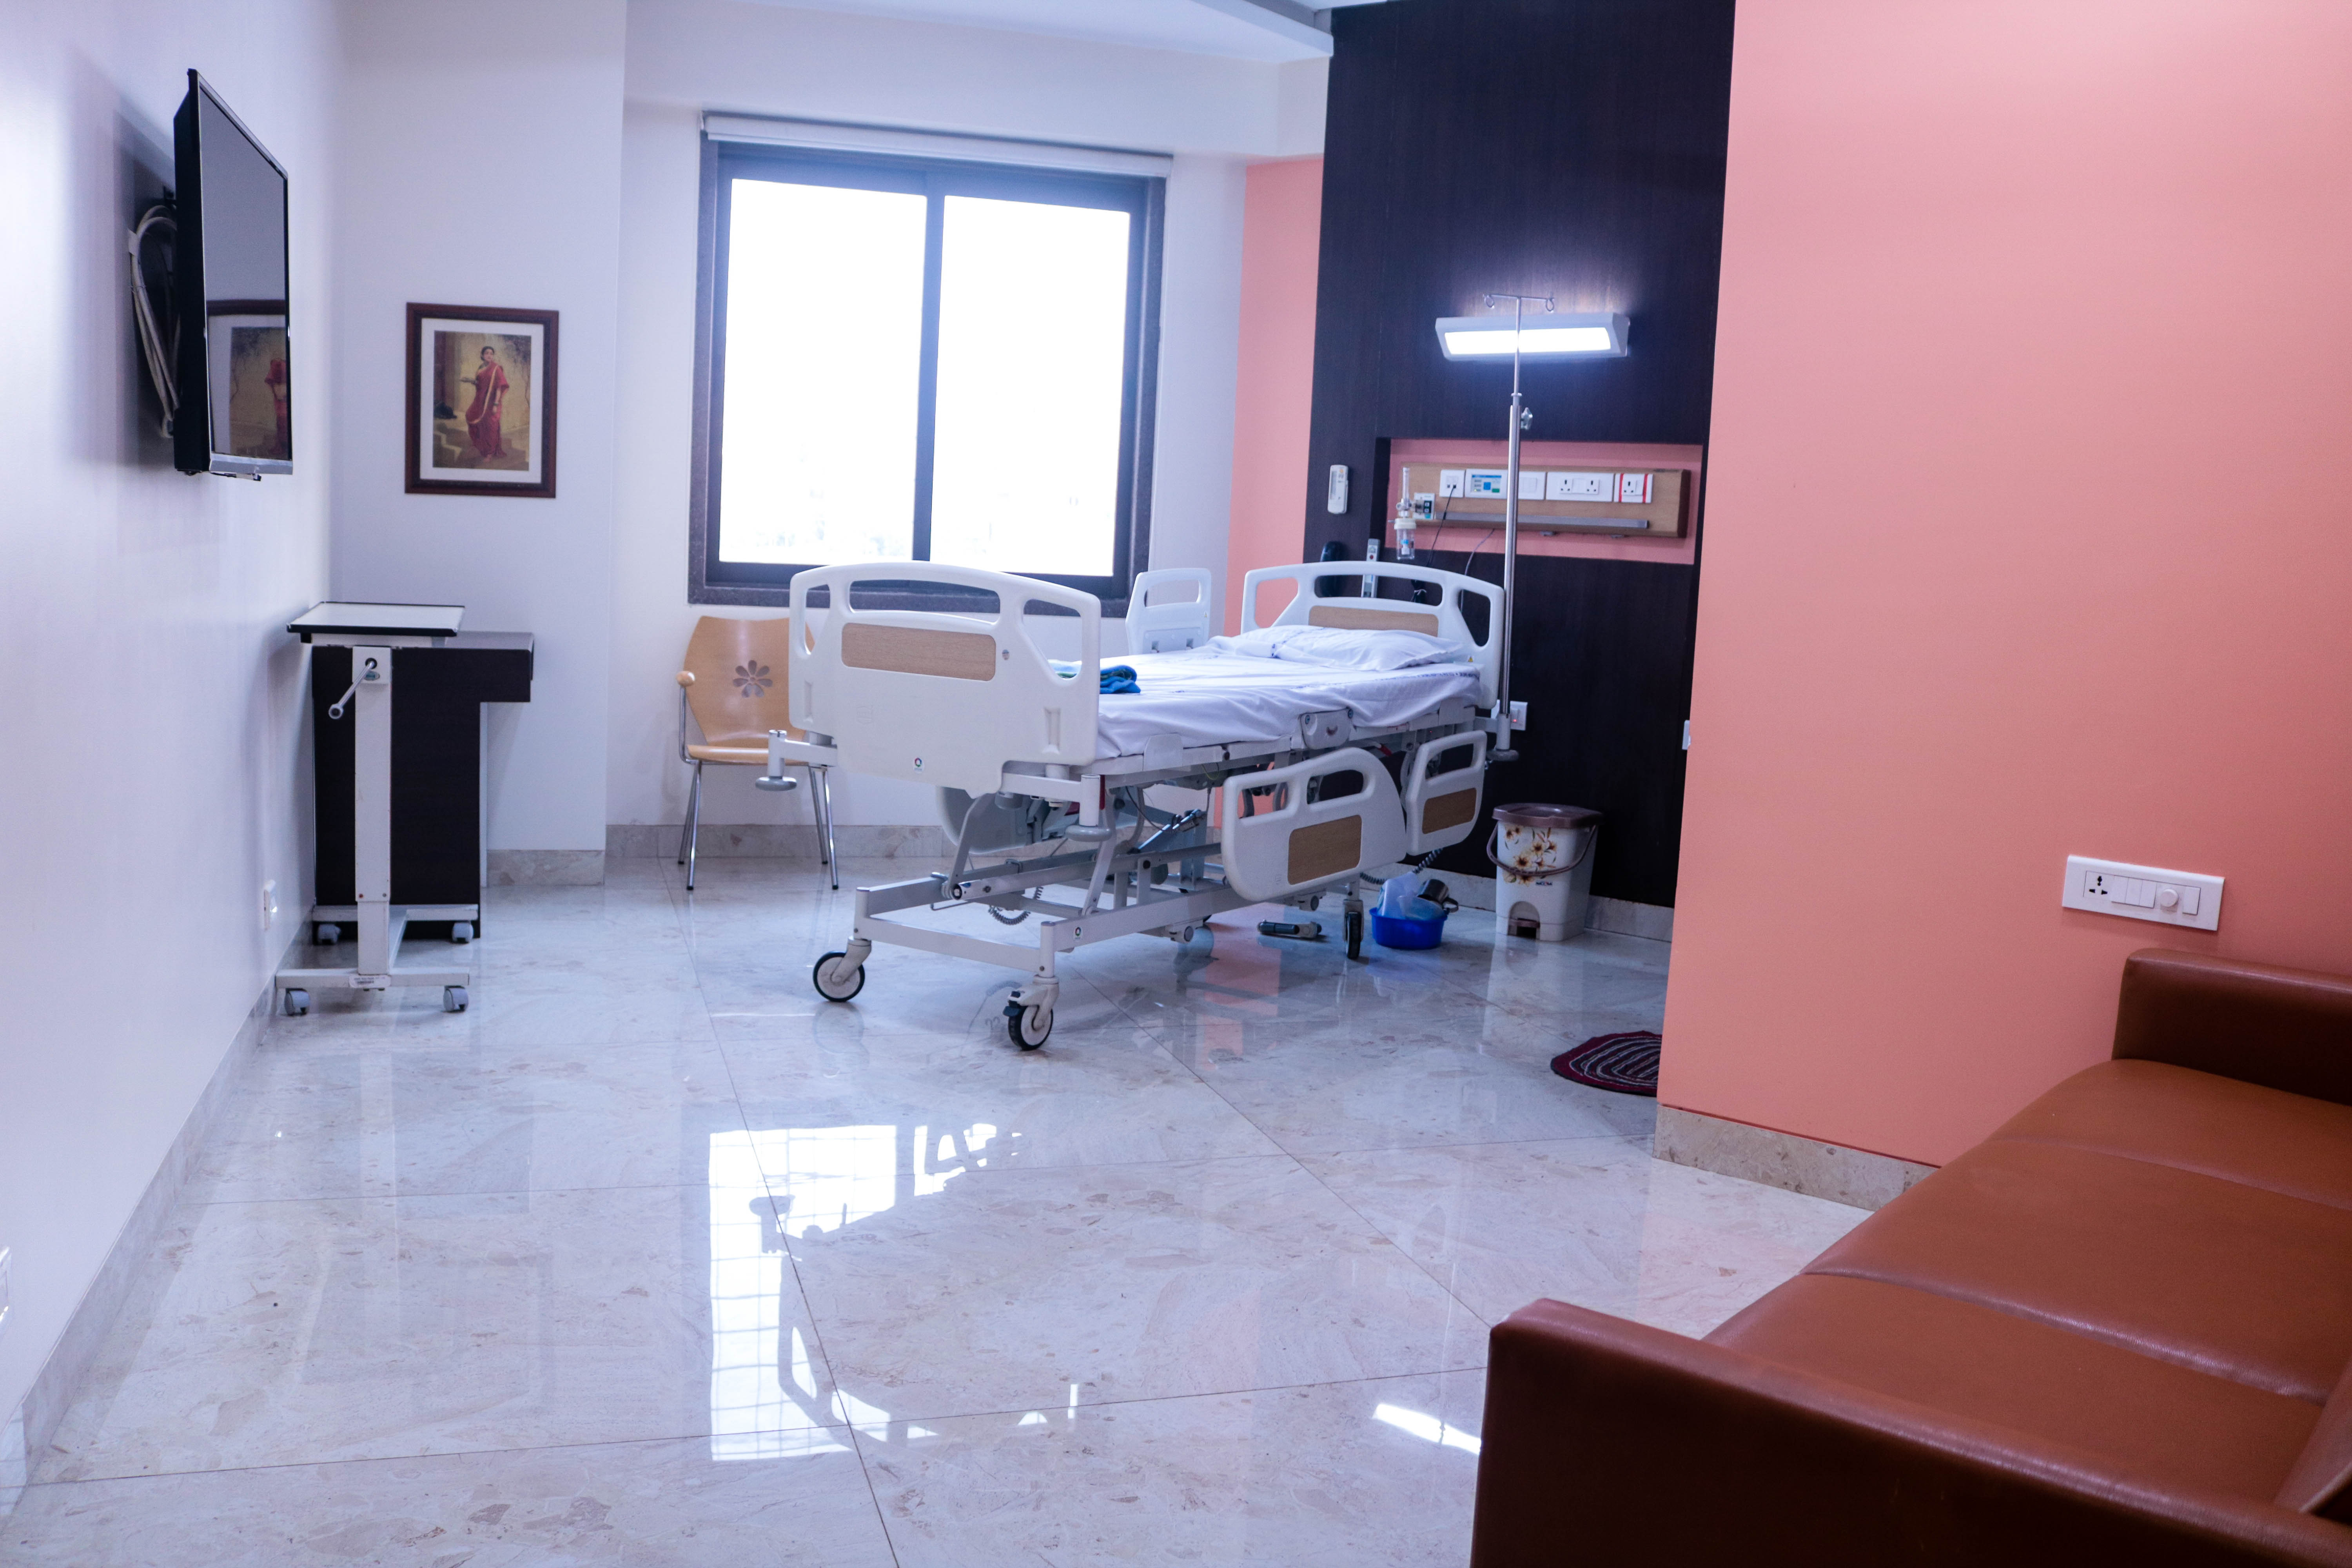 Facilities and Infrastructure at Dr. Debashish Das's Hospital in Chembur East, Mumbai